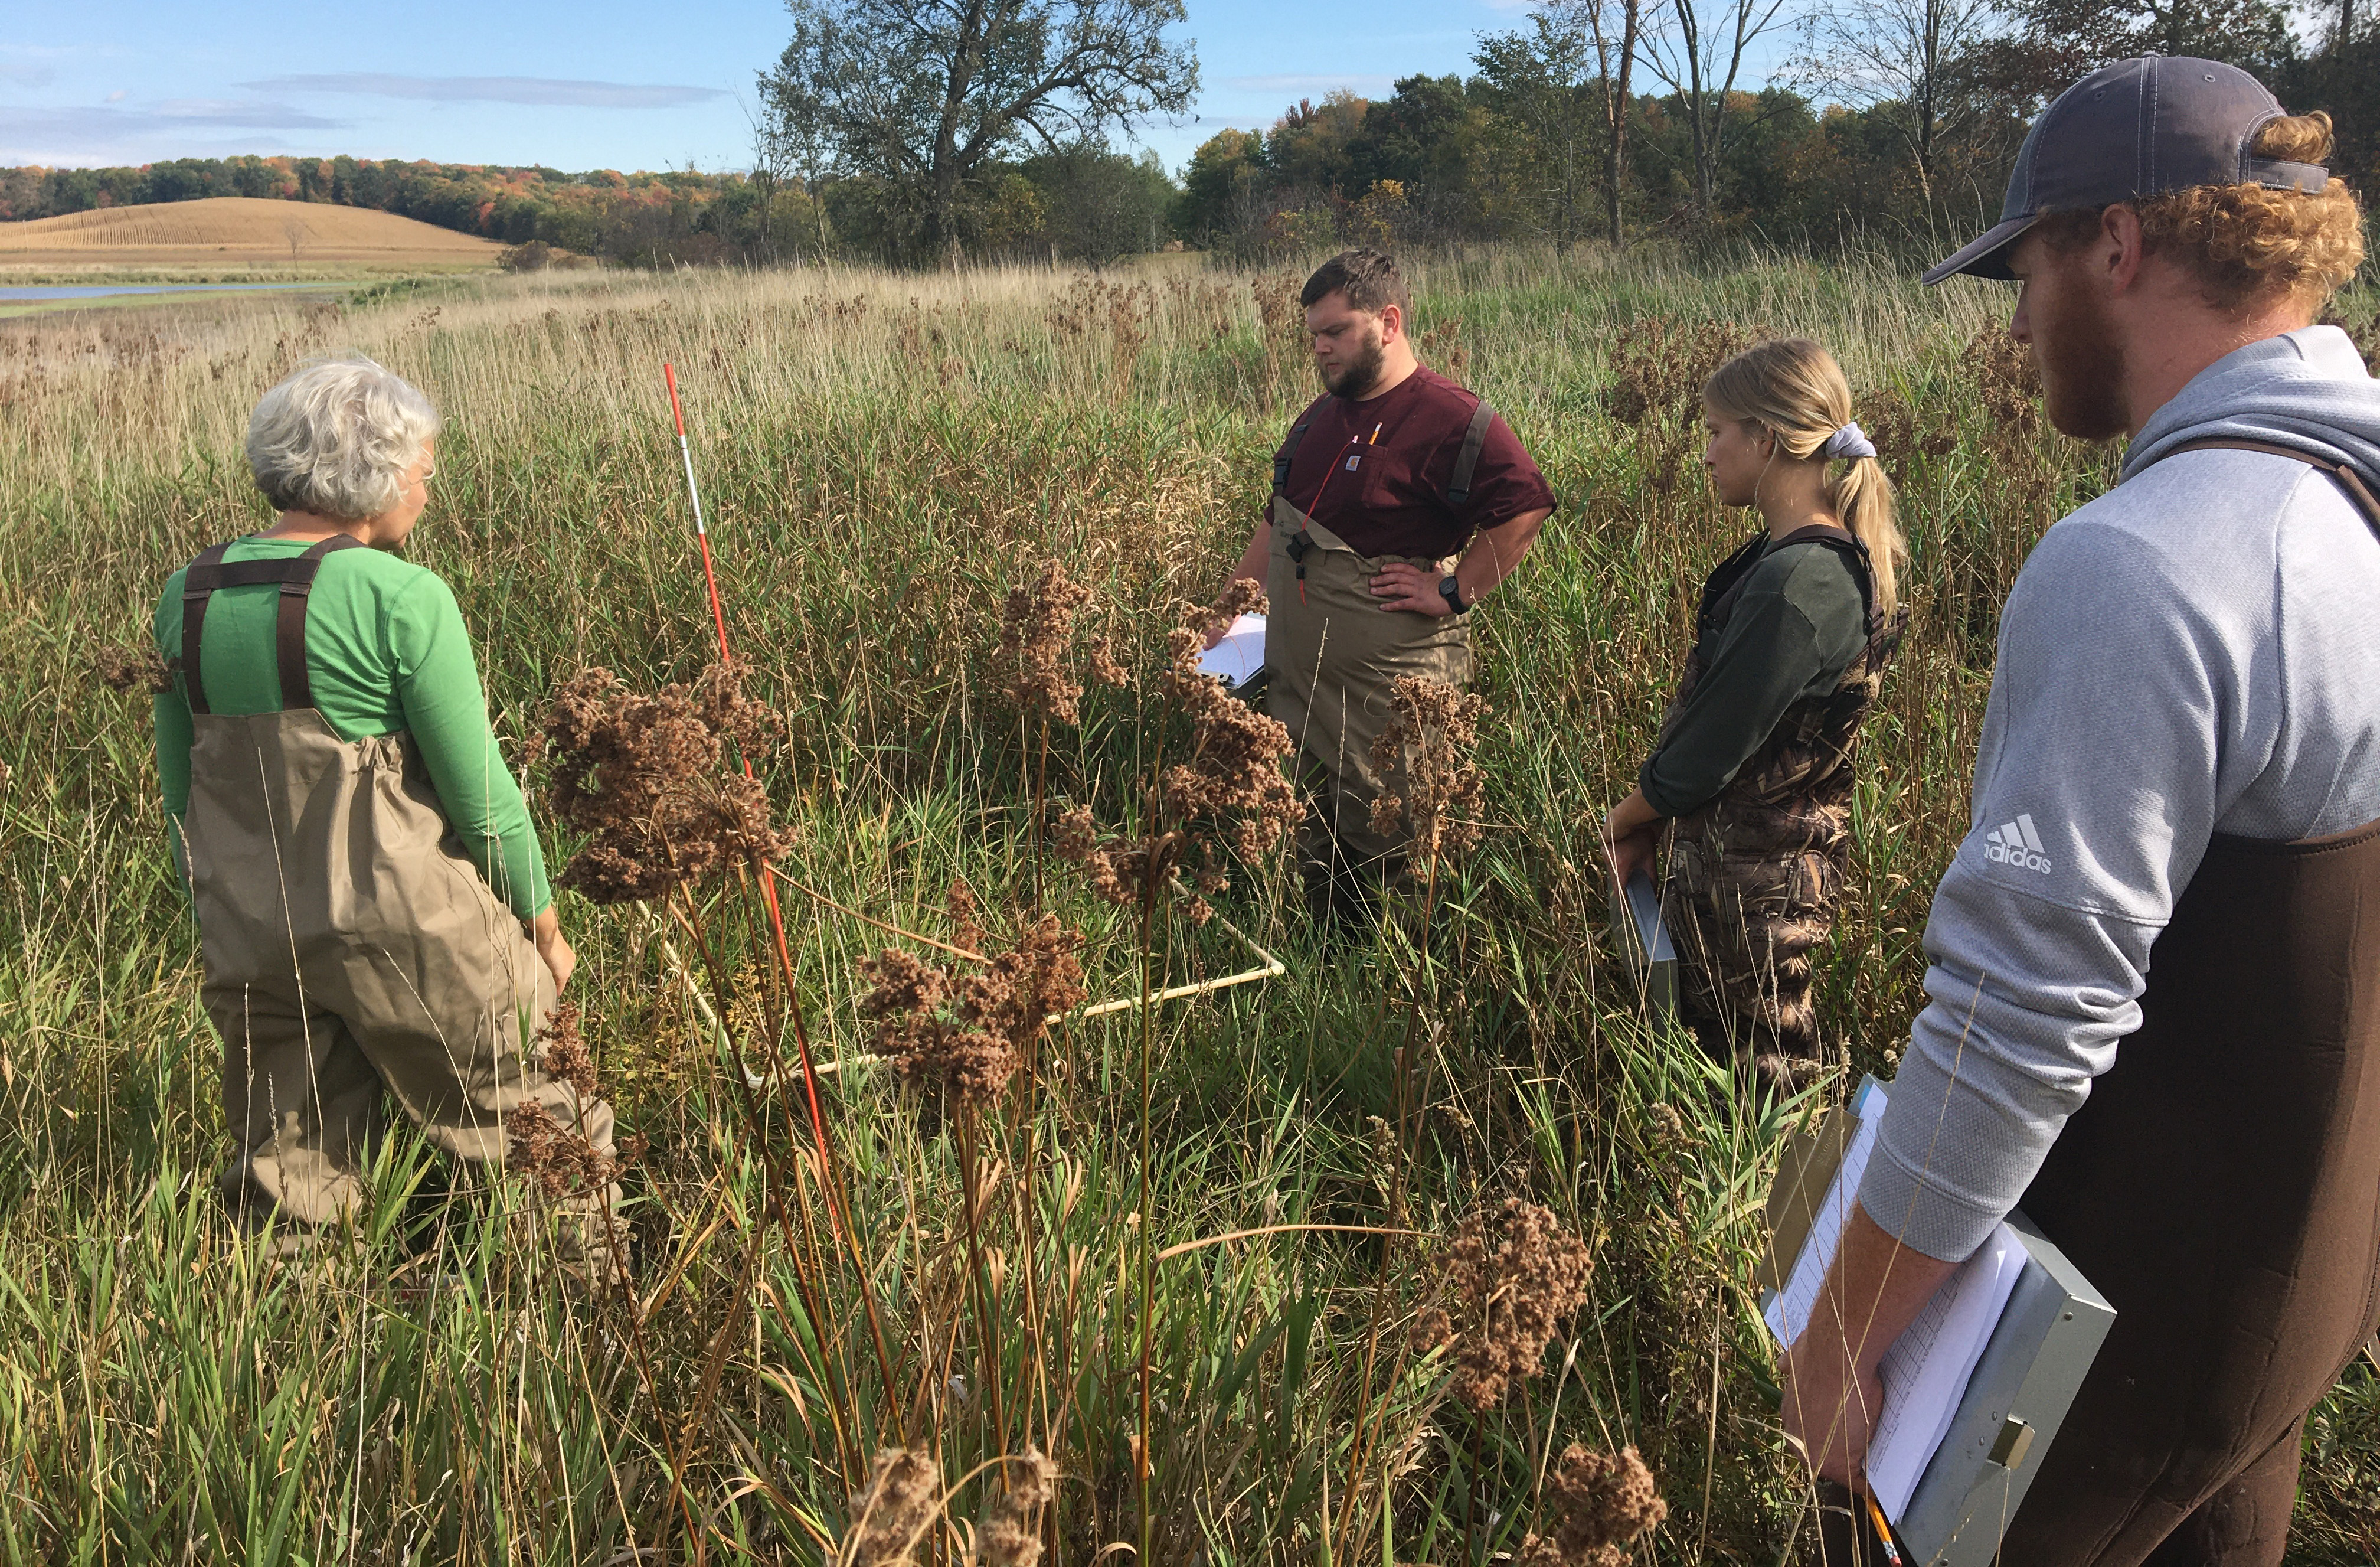 Students perform fieldwork in regional grasslands